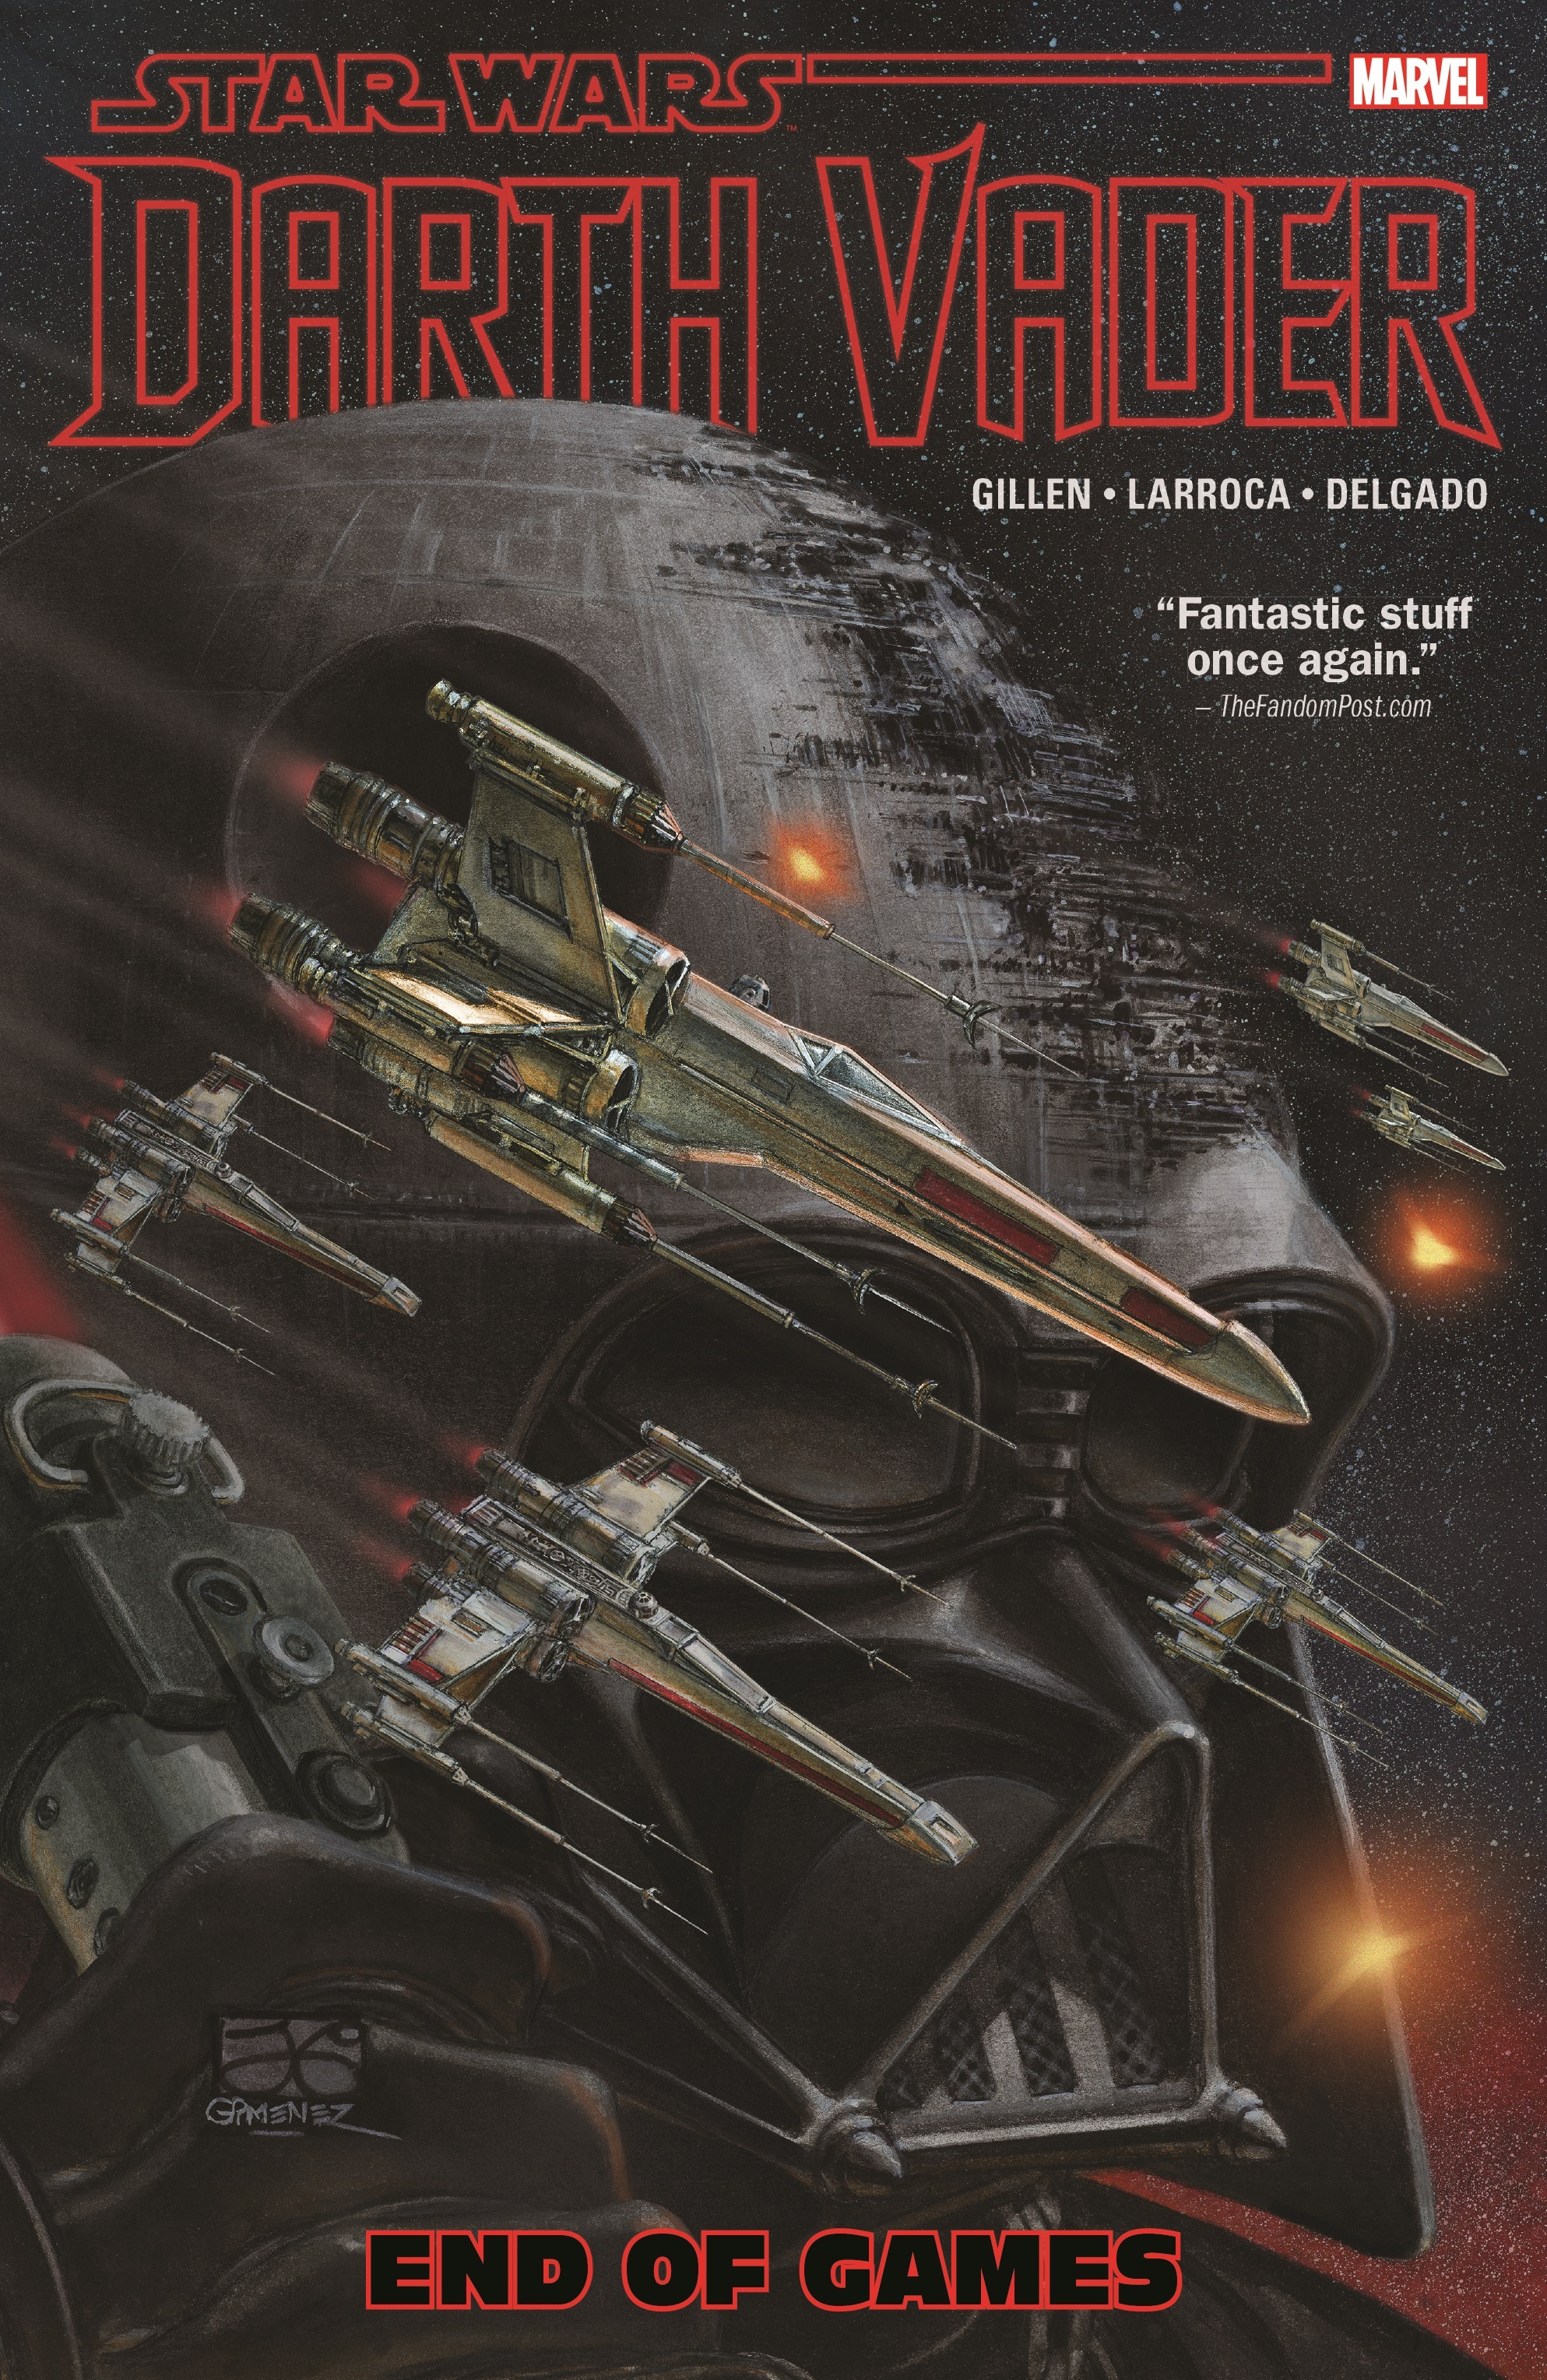 Star Wars: Darth Vader Vol. 4 - End of Games (Trade Paperback)